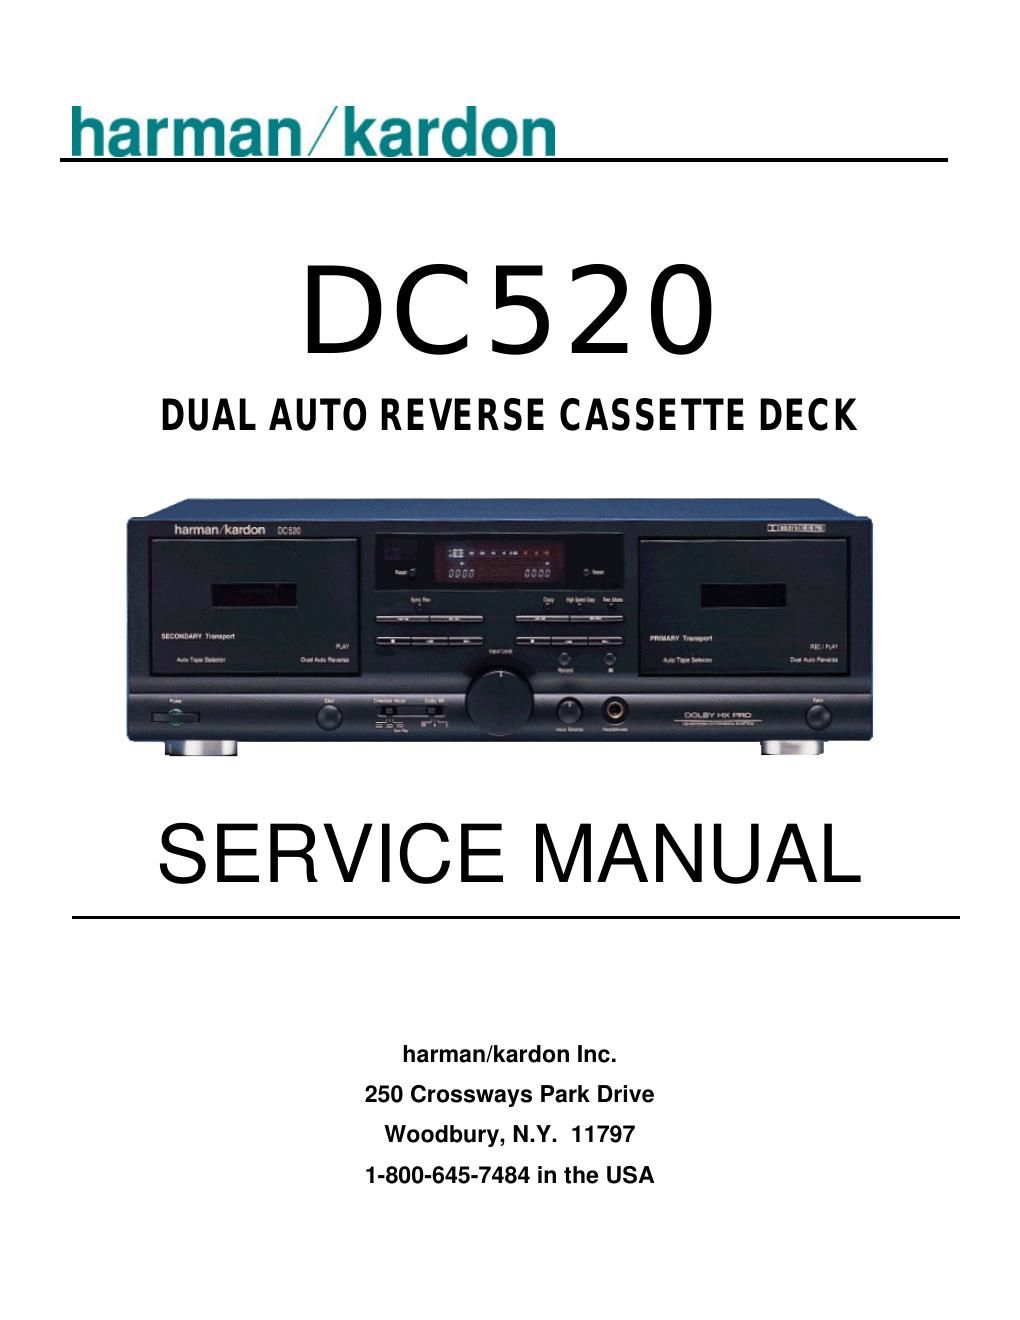 harman kardon dc 520 service manual